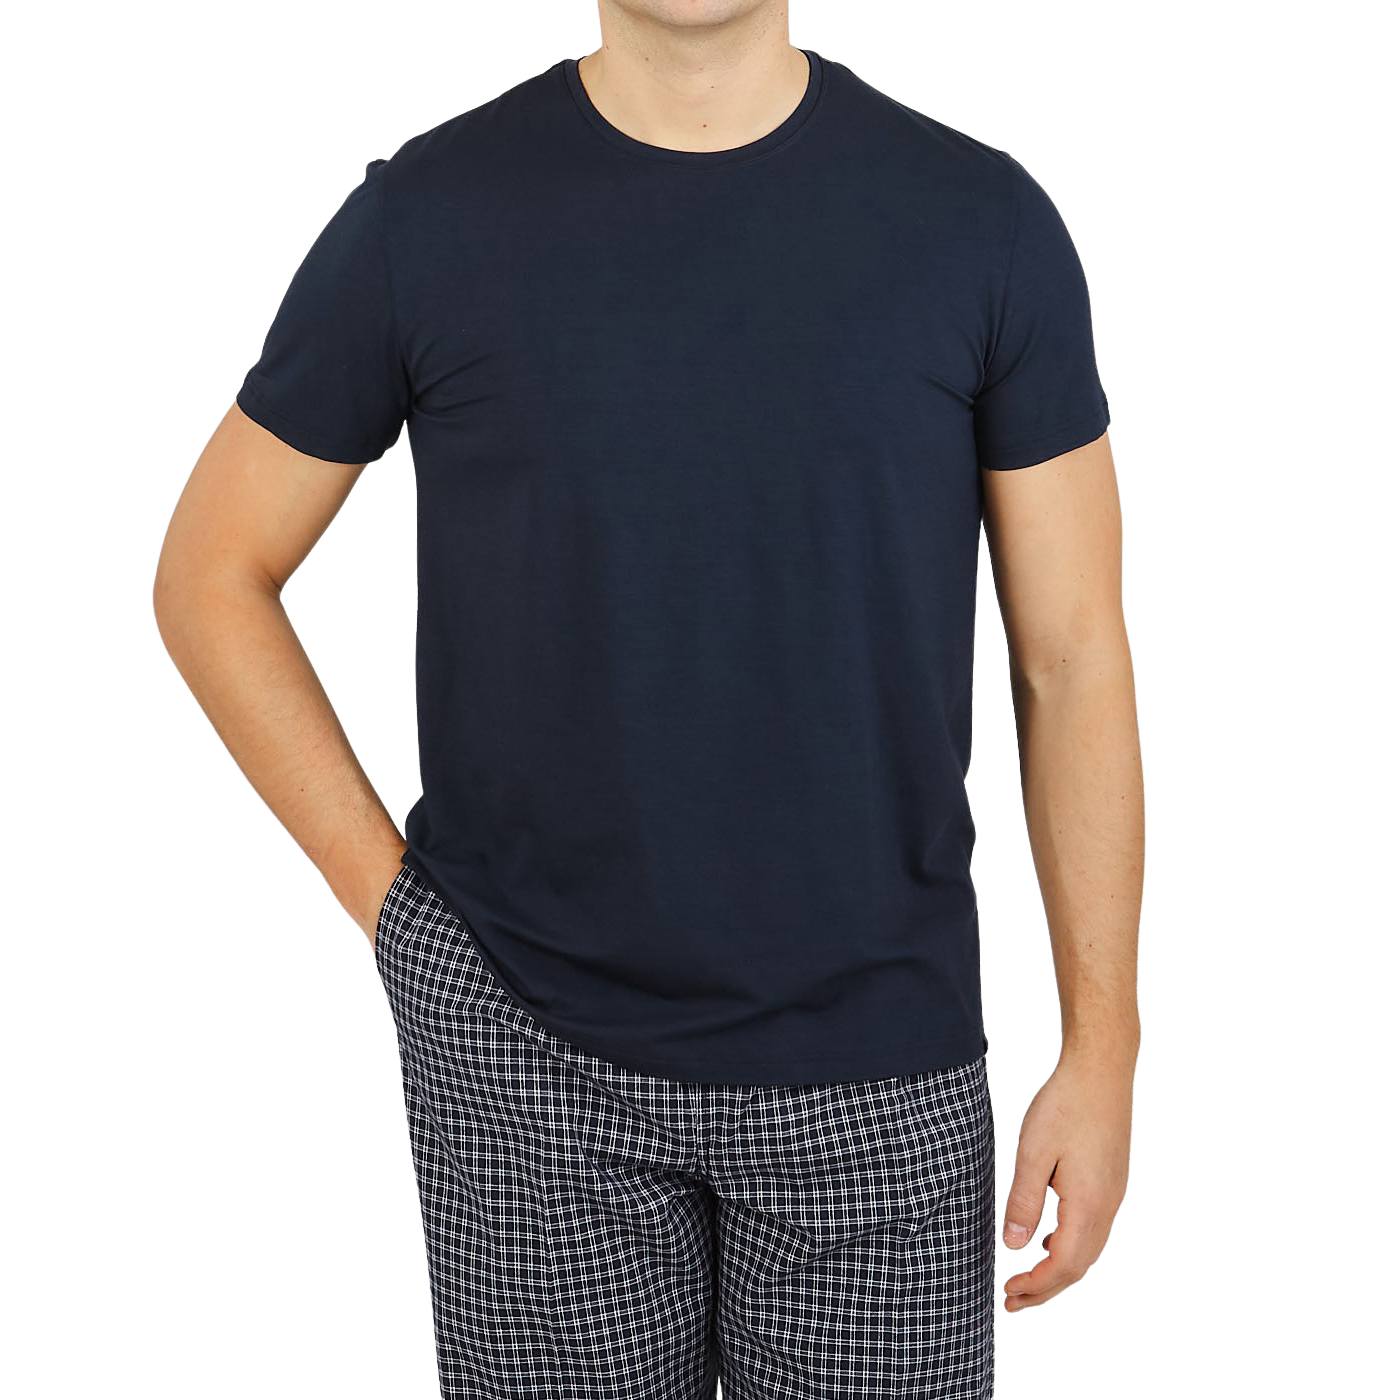 Derek Rose Navy Blue Micro Modal Stretch T-shirt Front